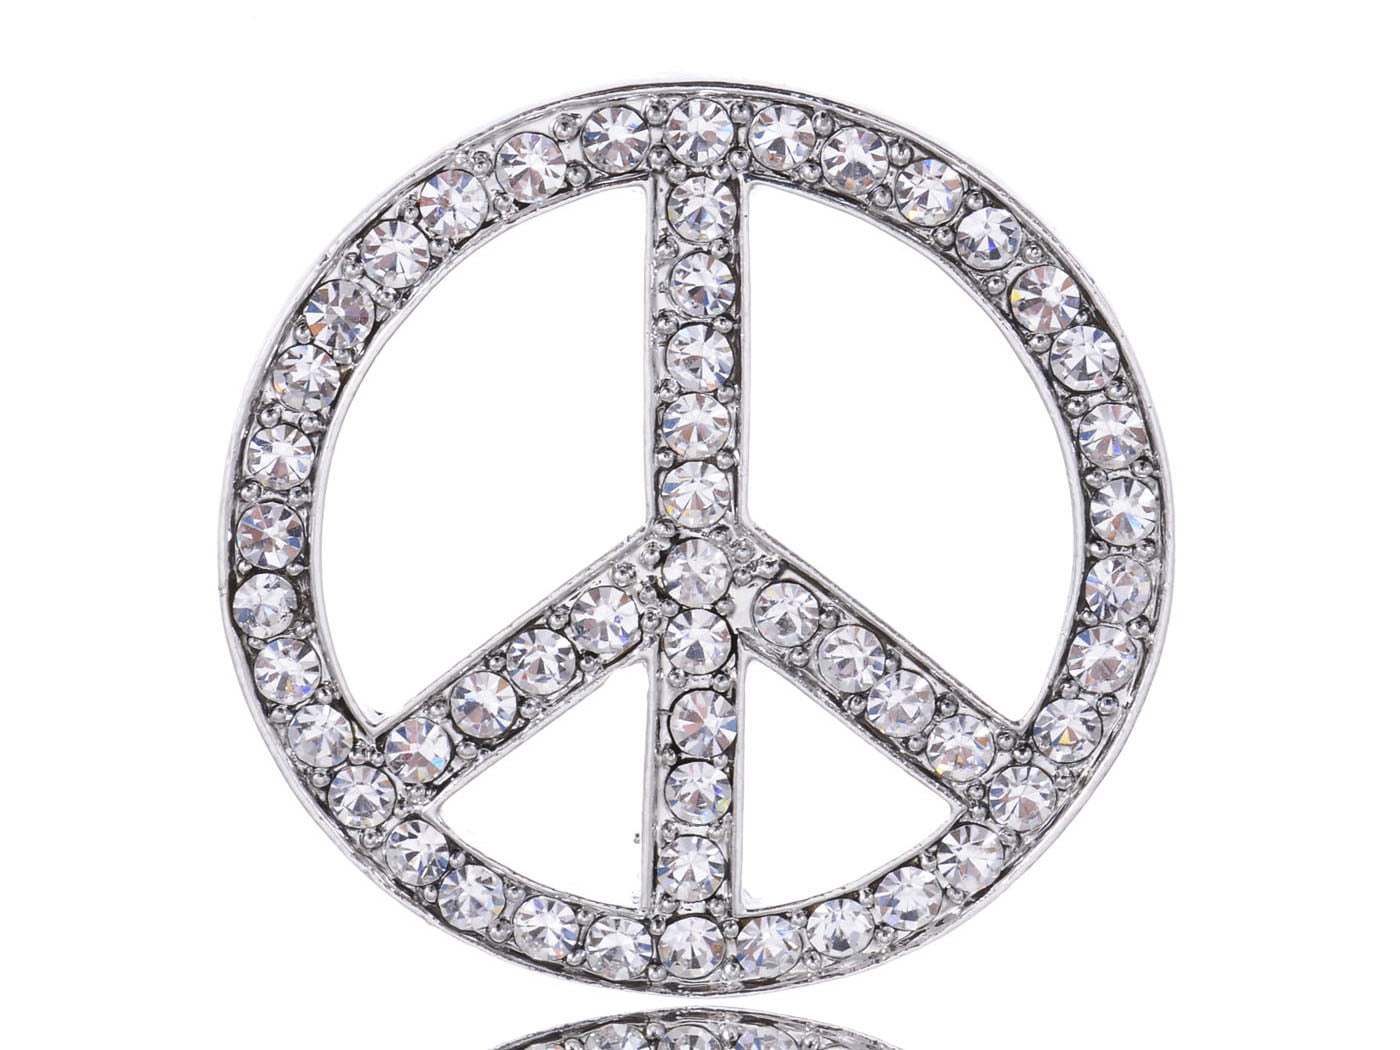 Crystal American Flag Earrings Peace Sign Anti Nuclear Symbol CND Activist USA 